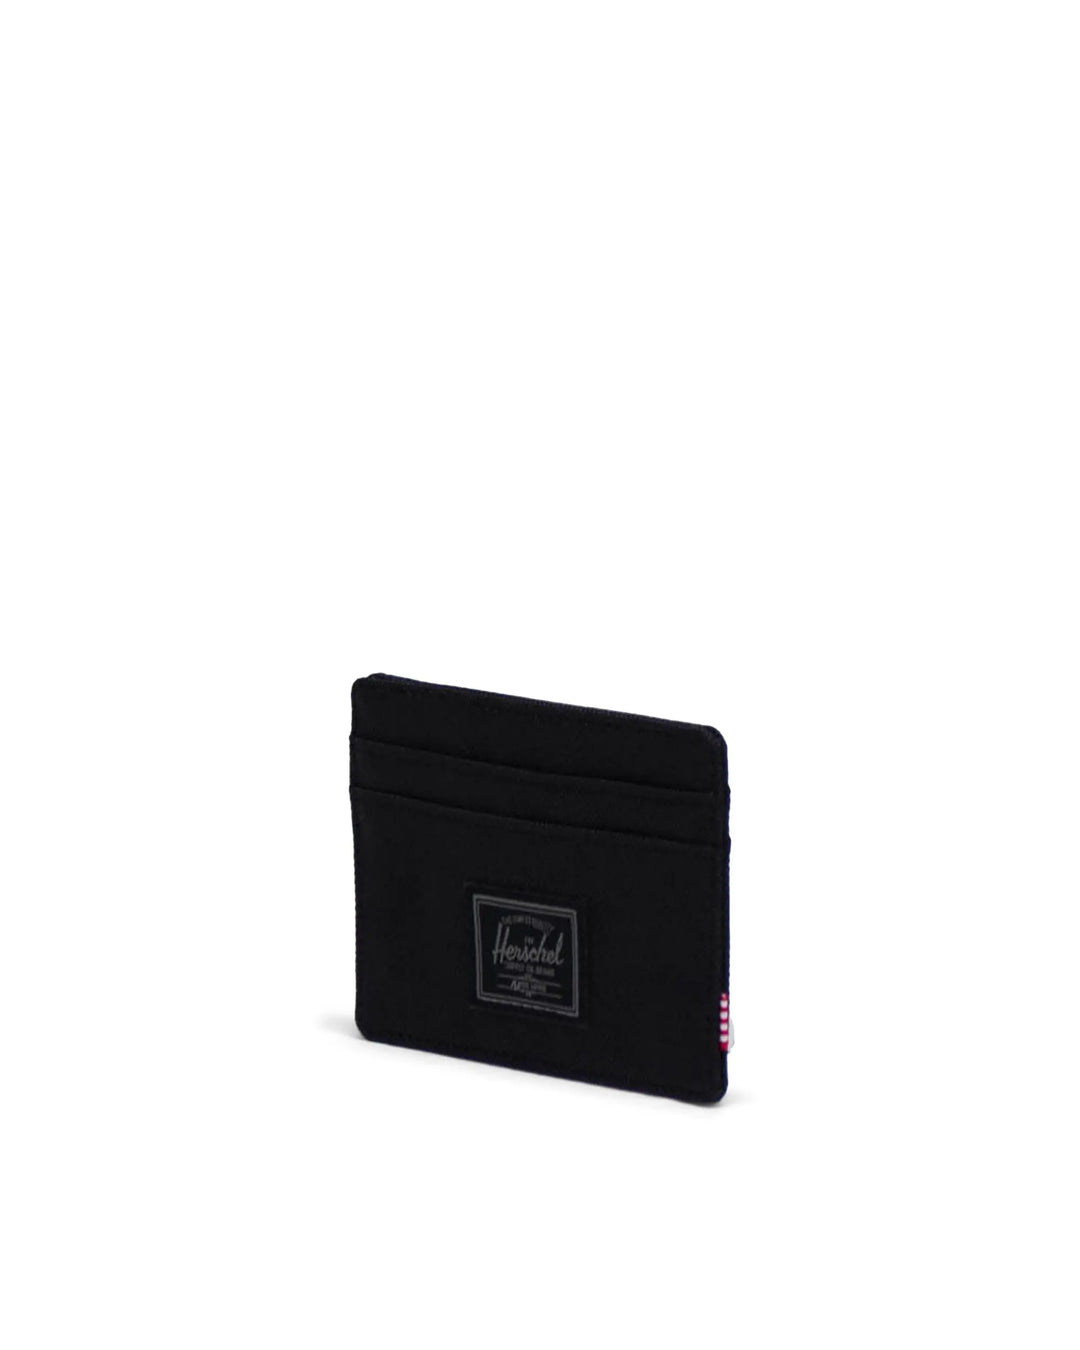 Herschel Supply Co Charlie Cardholder Wallet - BLACK TONAL - Sun Diego Boardshop